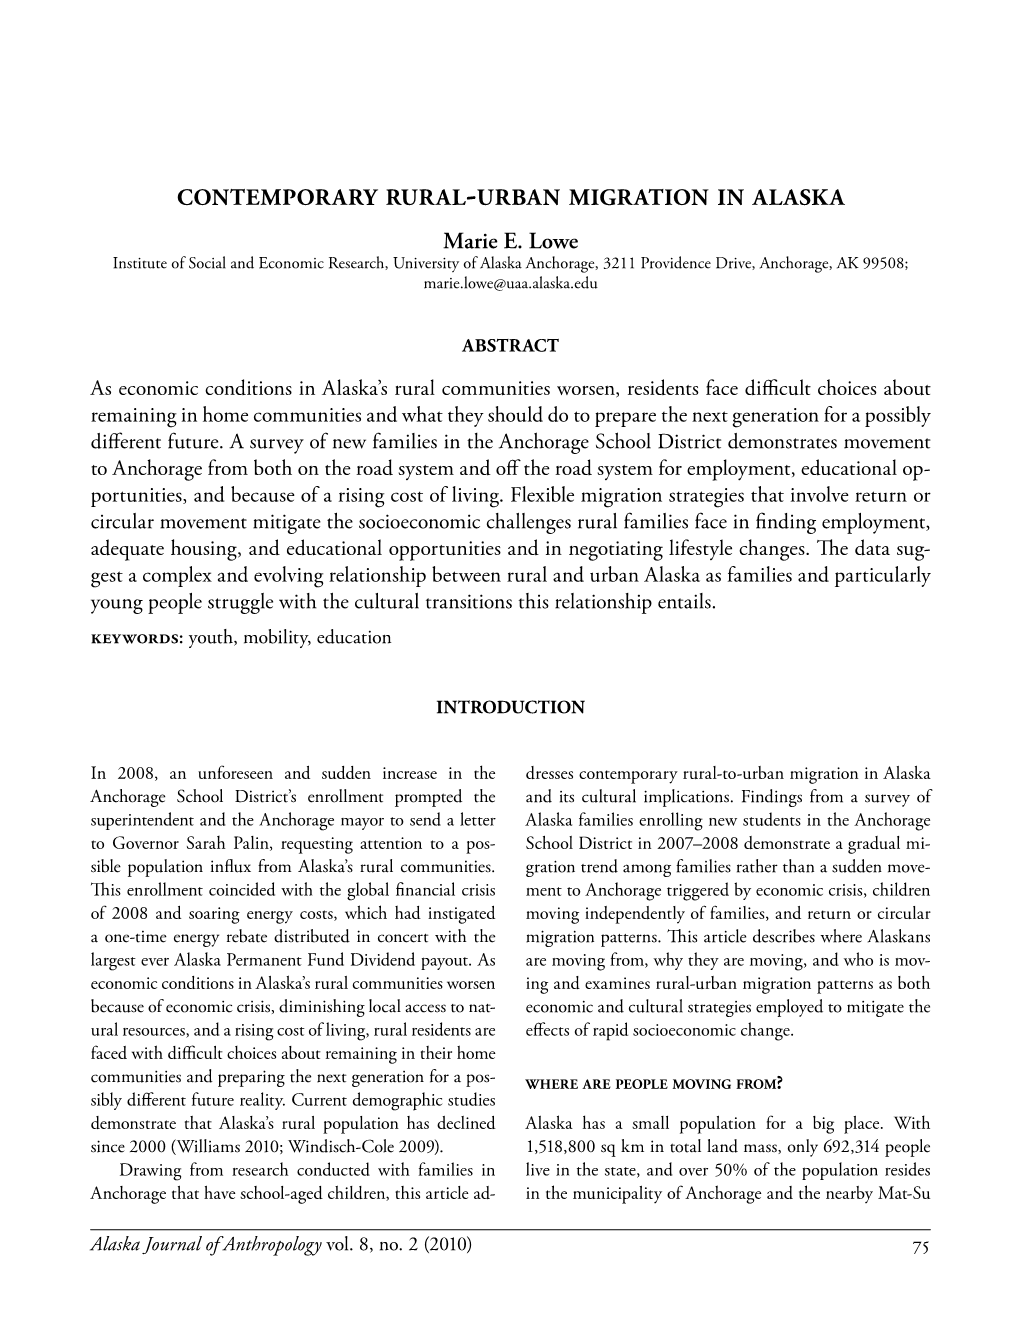 CONTEMPORARY RURAL -URBAN MIGRATION in ALASKA Marie E